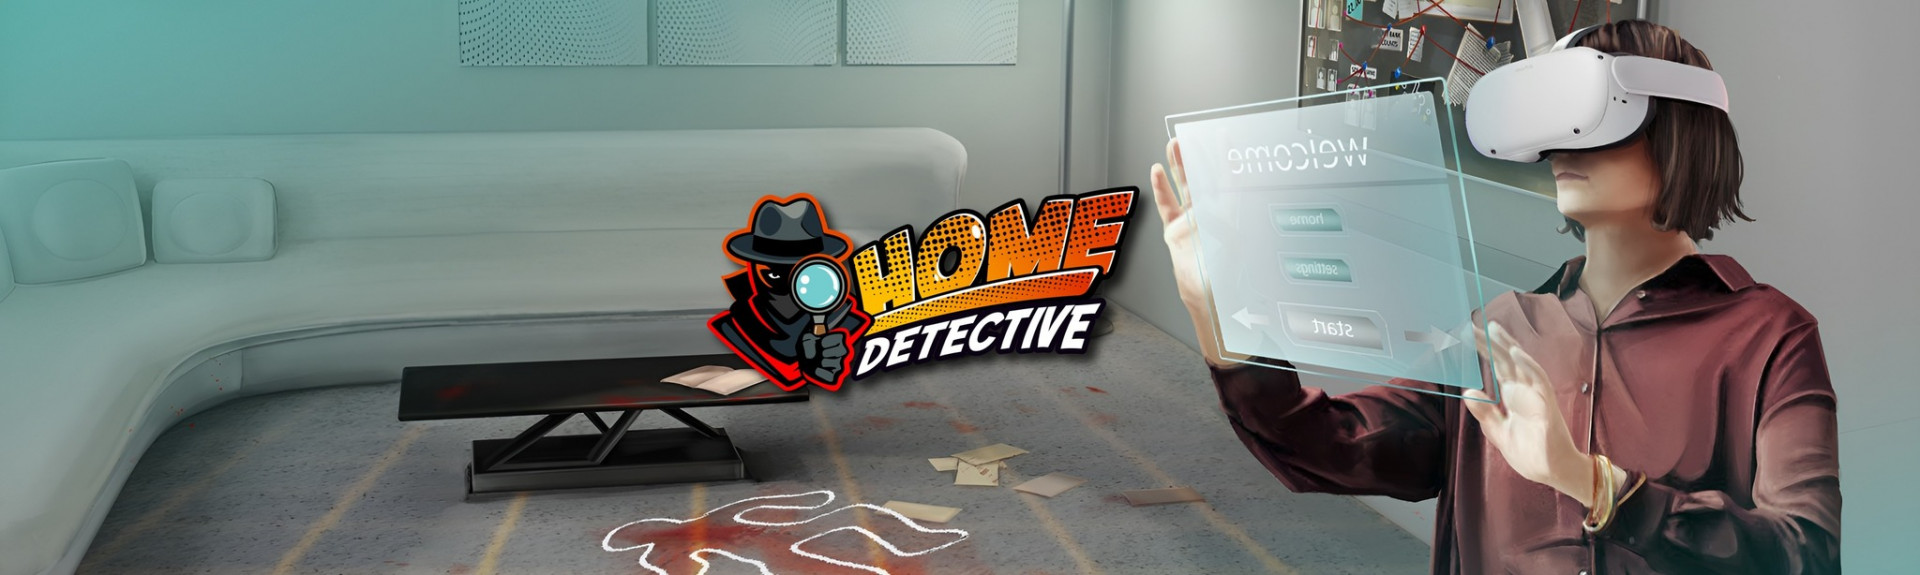 Home Detective